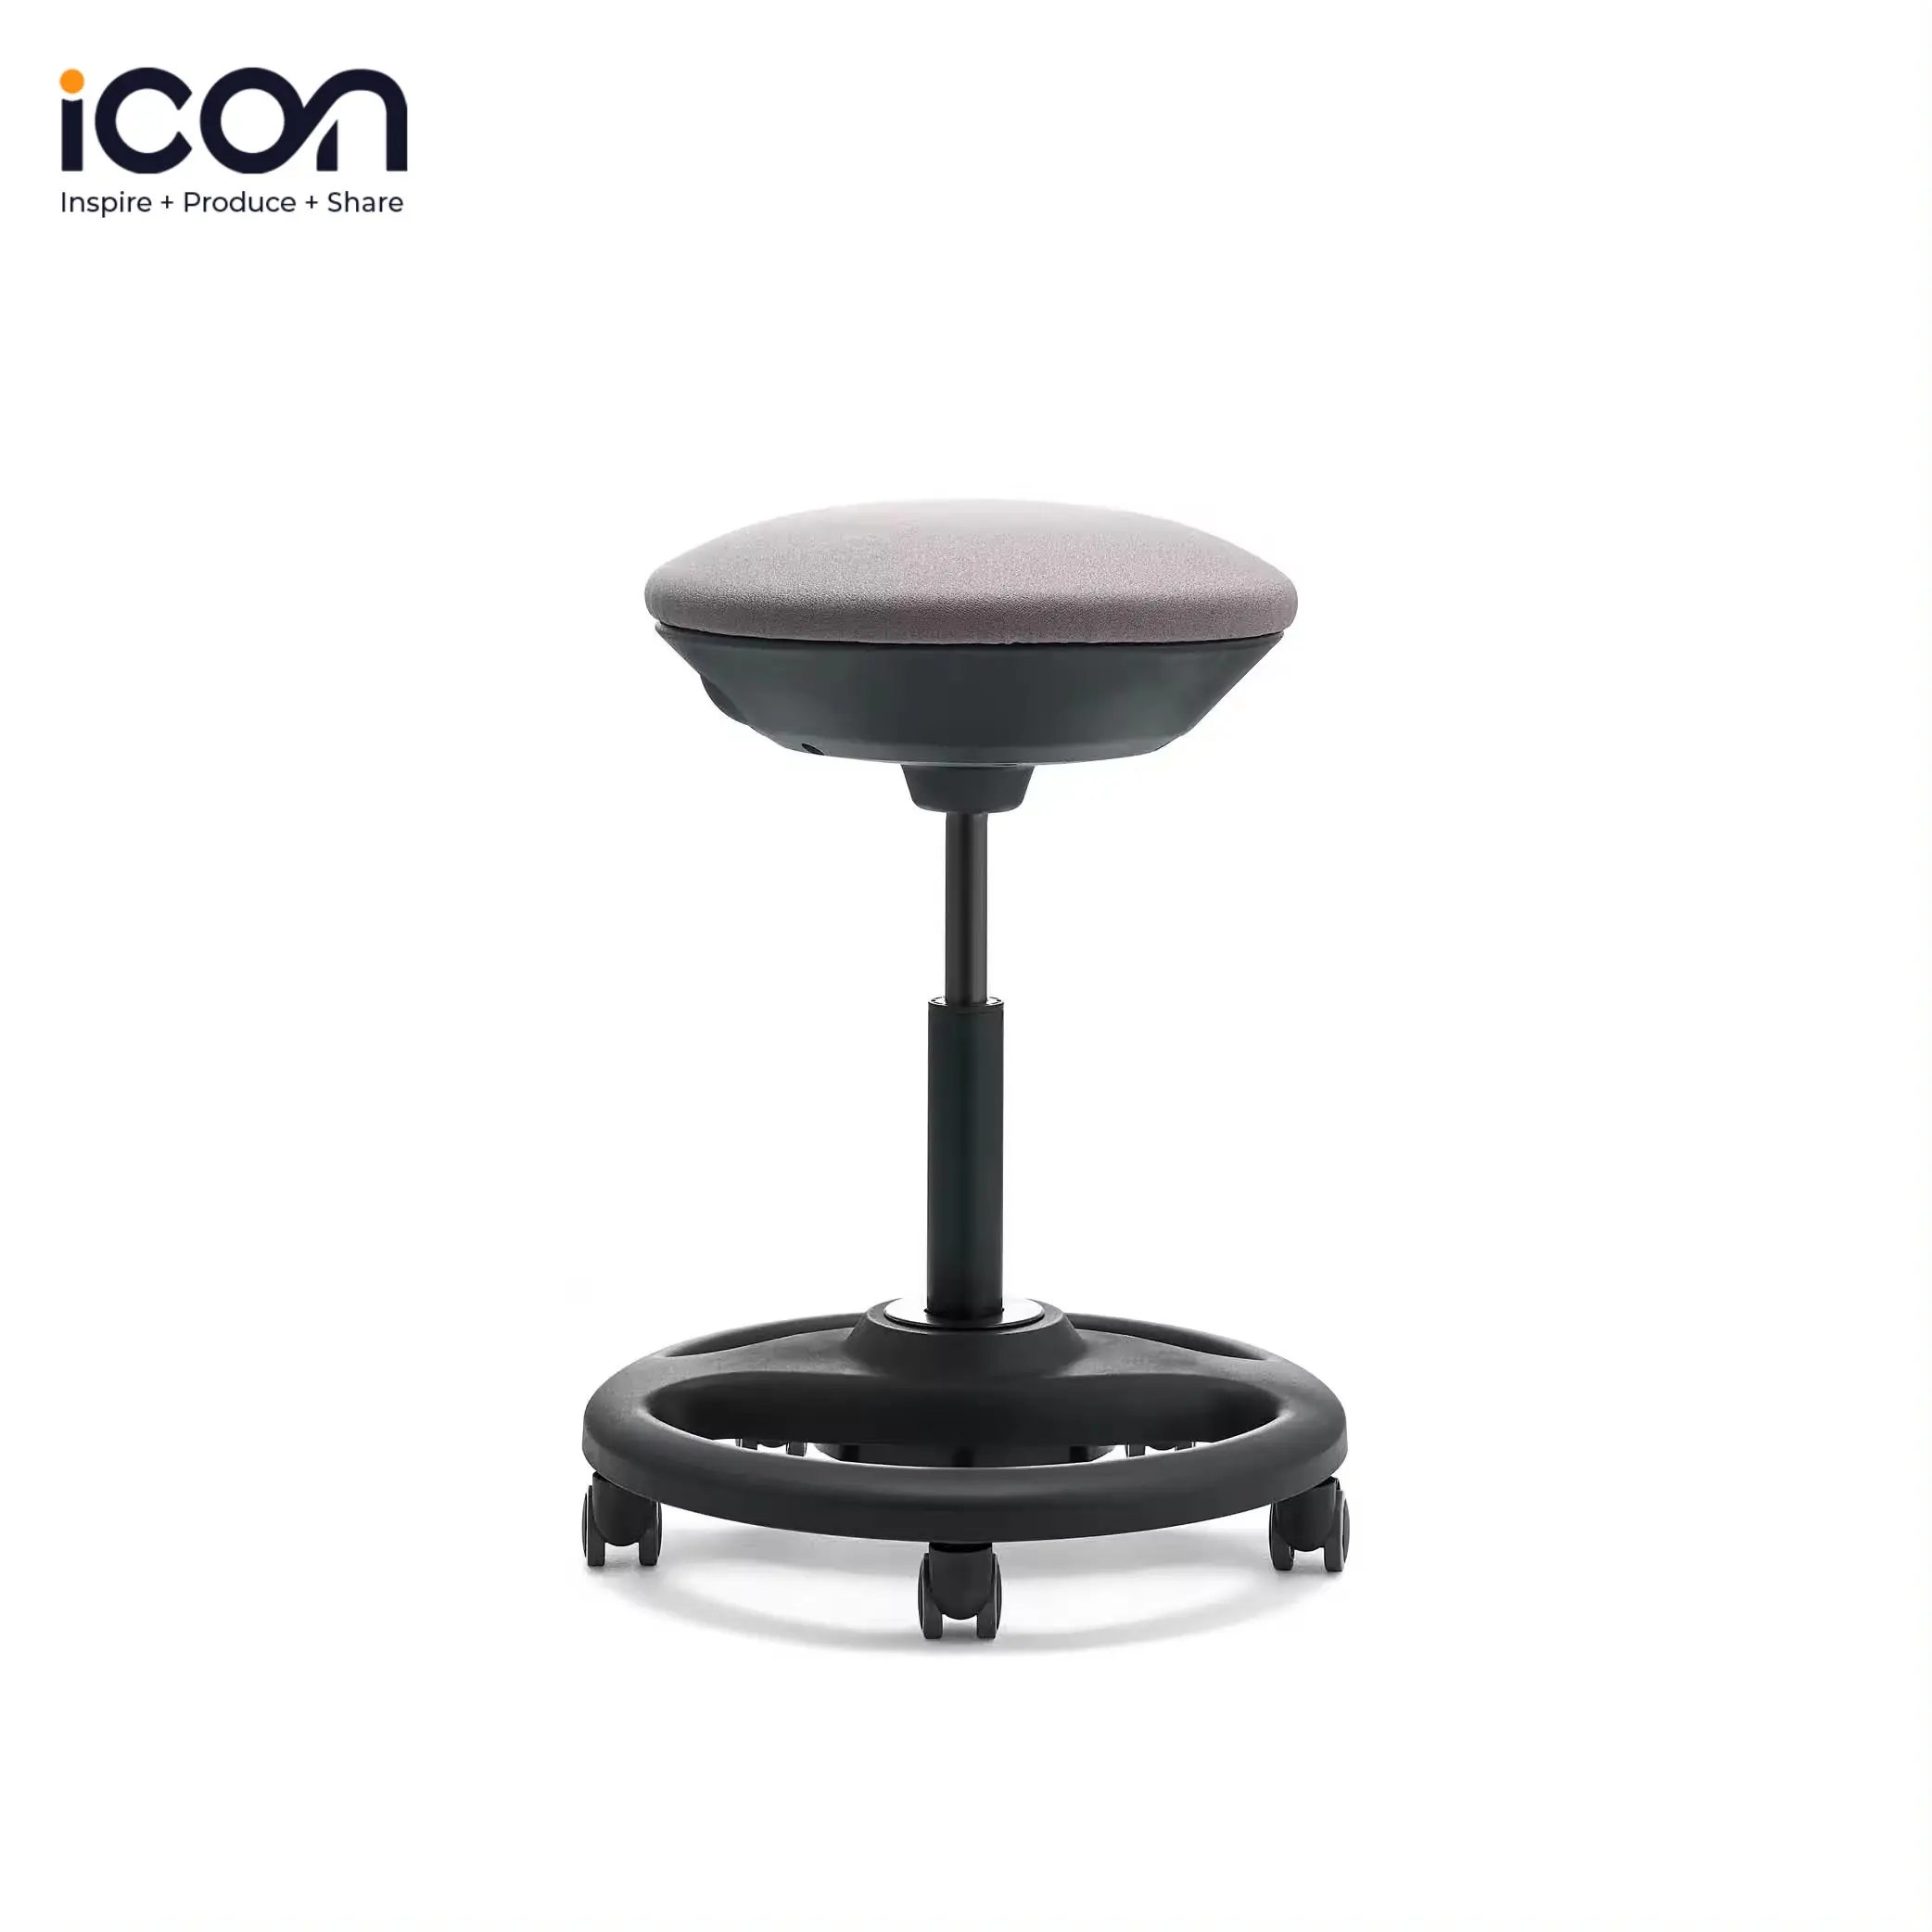 Adjustable Active Balance Non-Slip Desk Chair Rocking Tilting Motion Stool Office Rolling Wobble Stool